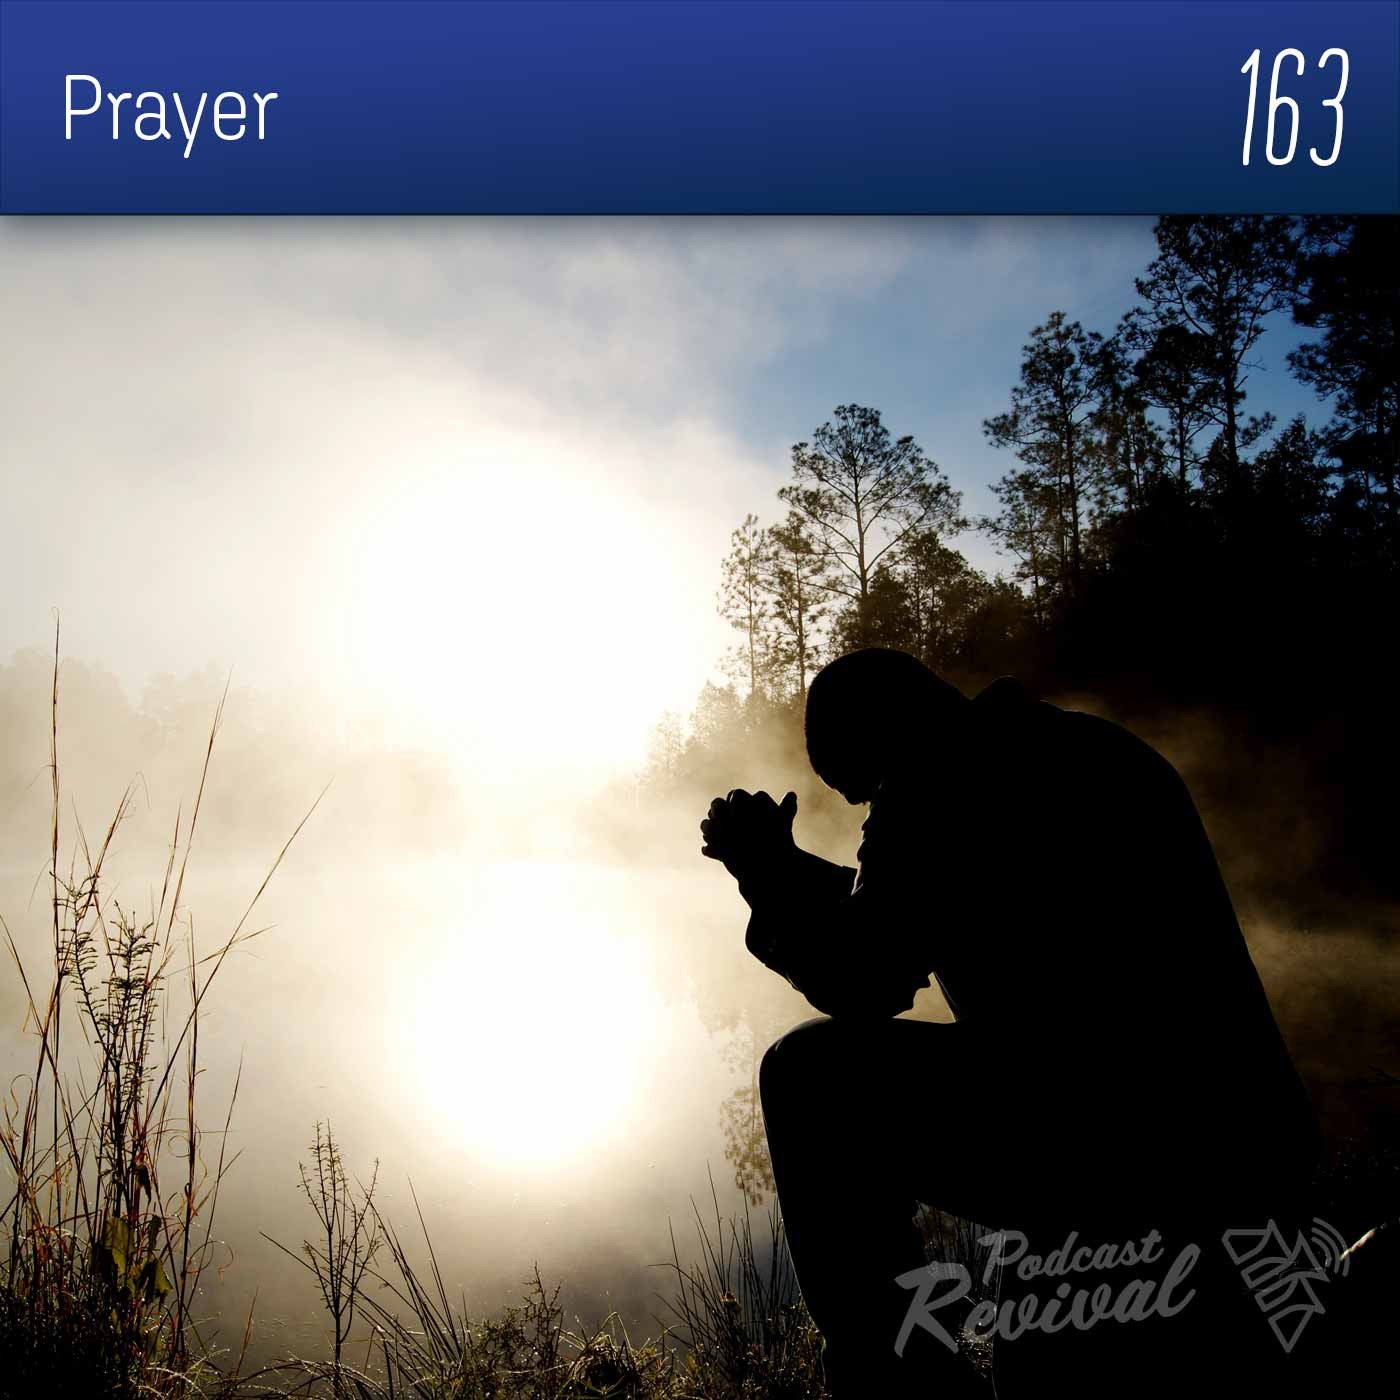 Prayer - Peter Nankivell - 163